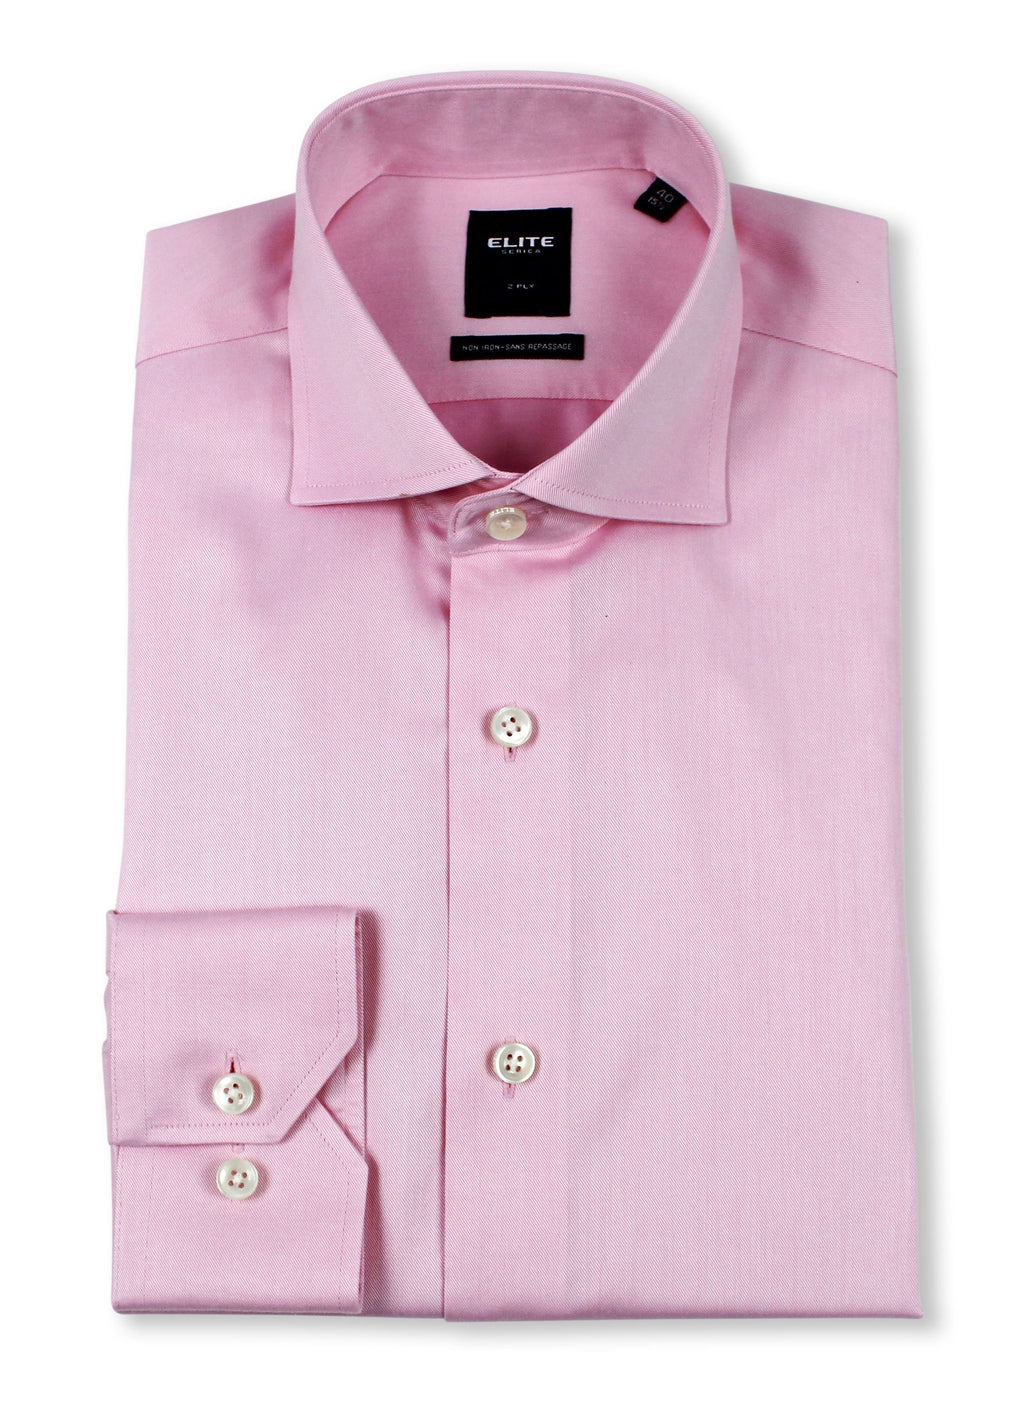 Serica - Elite - Dress Shirt - E106-42 - Pink